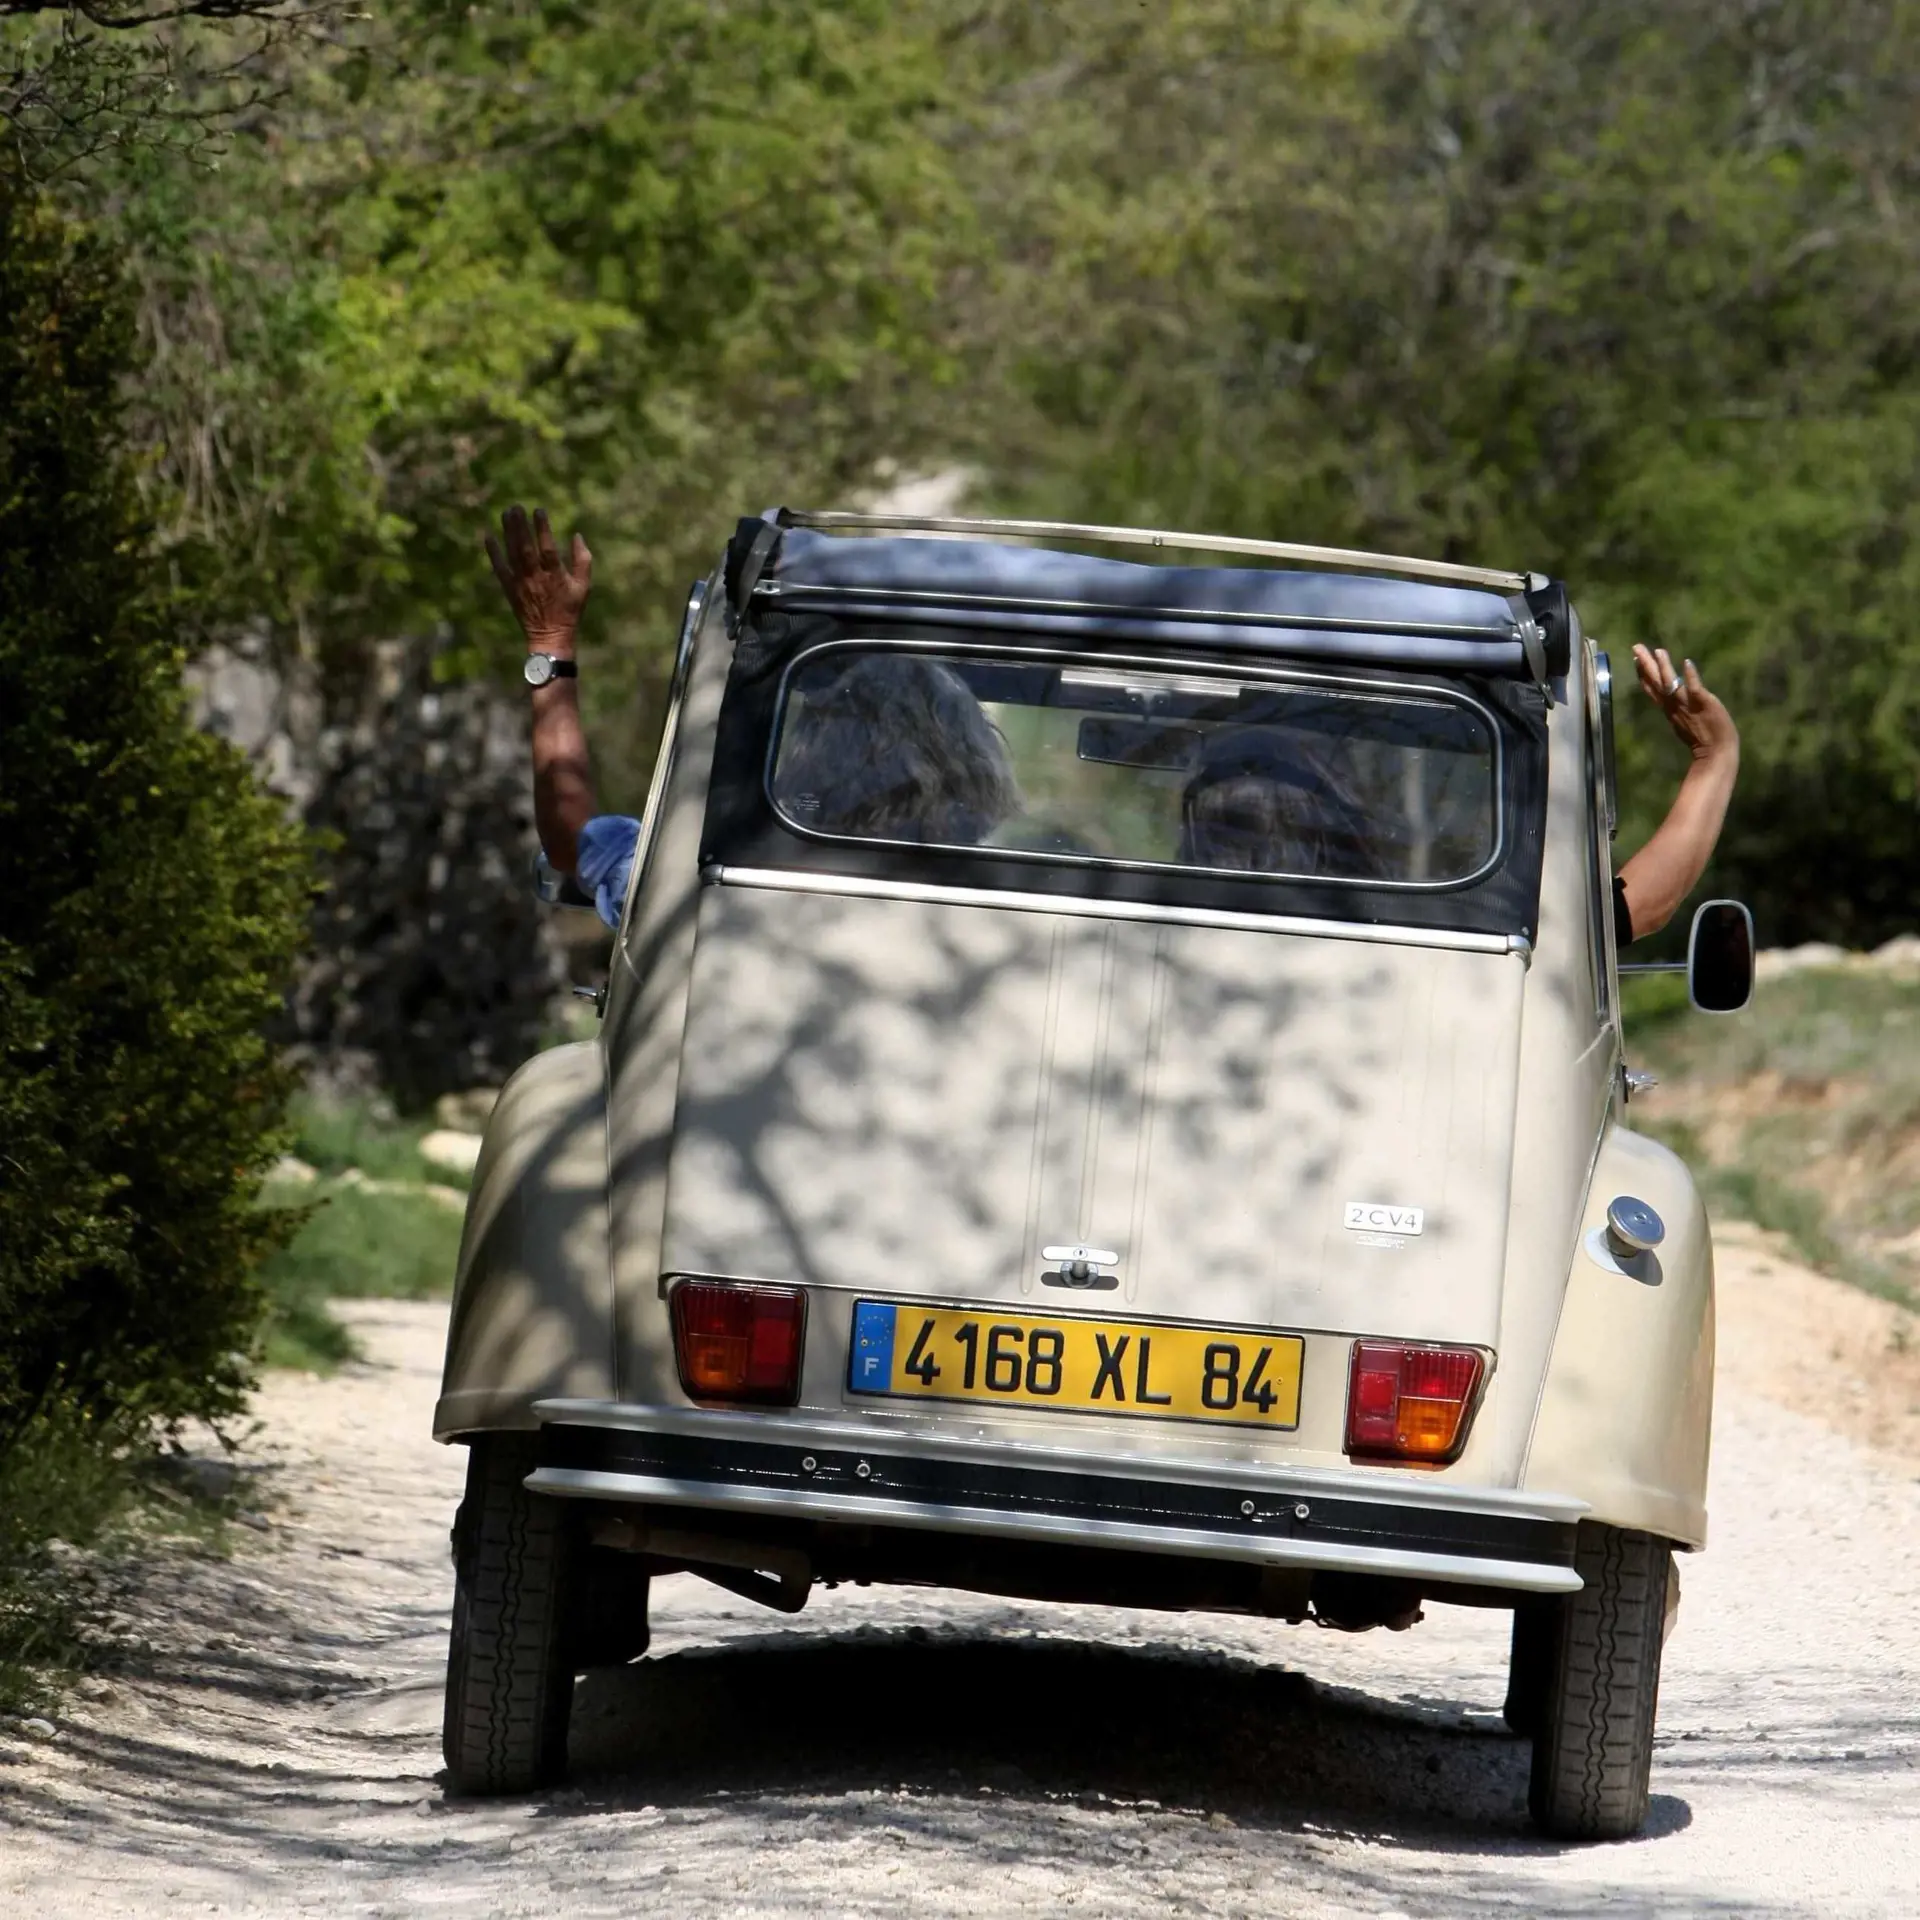 Ontdek de mooiste plekjes in Zuid-Europa met de auto